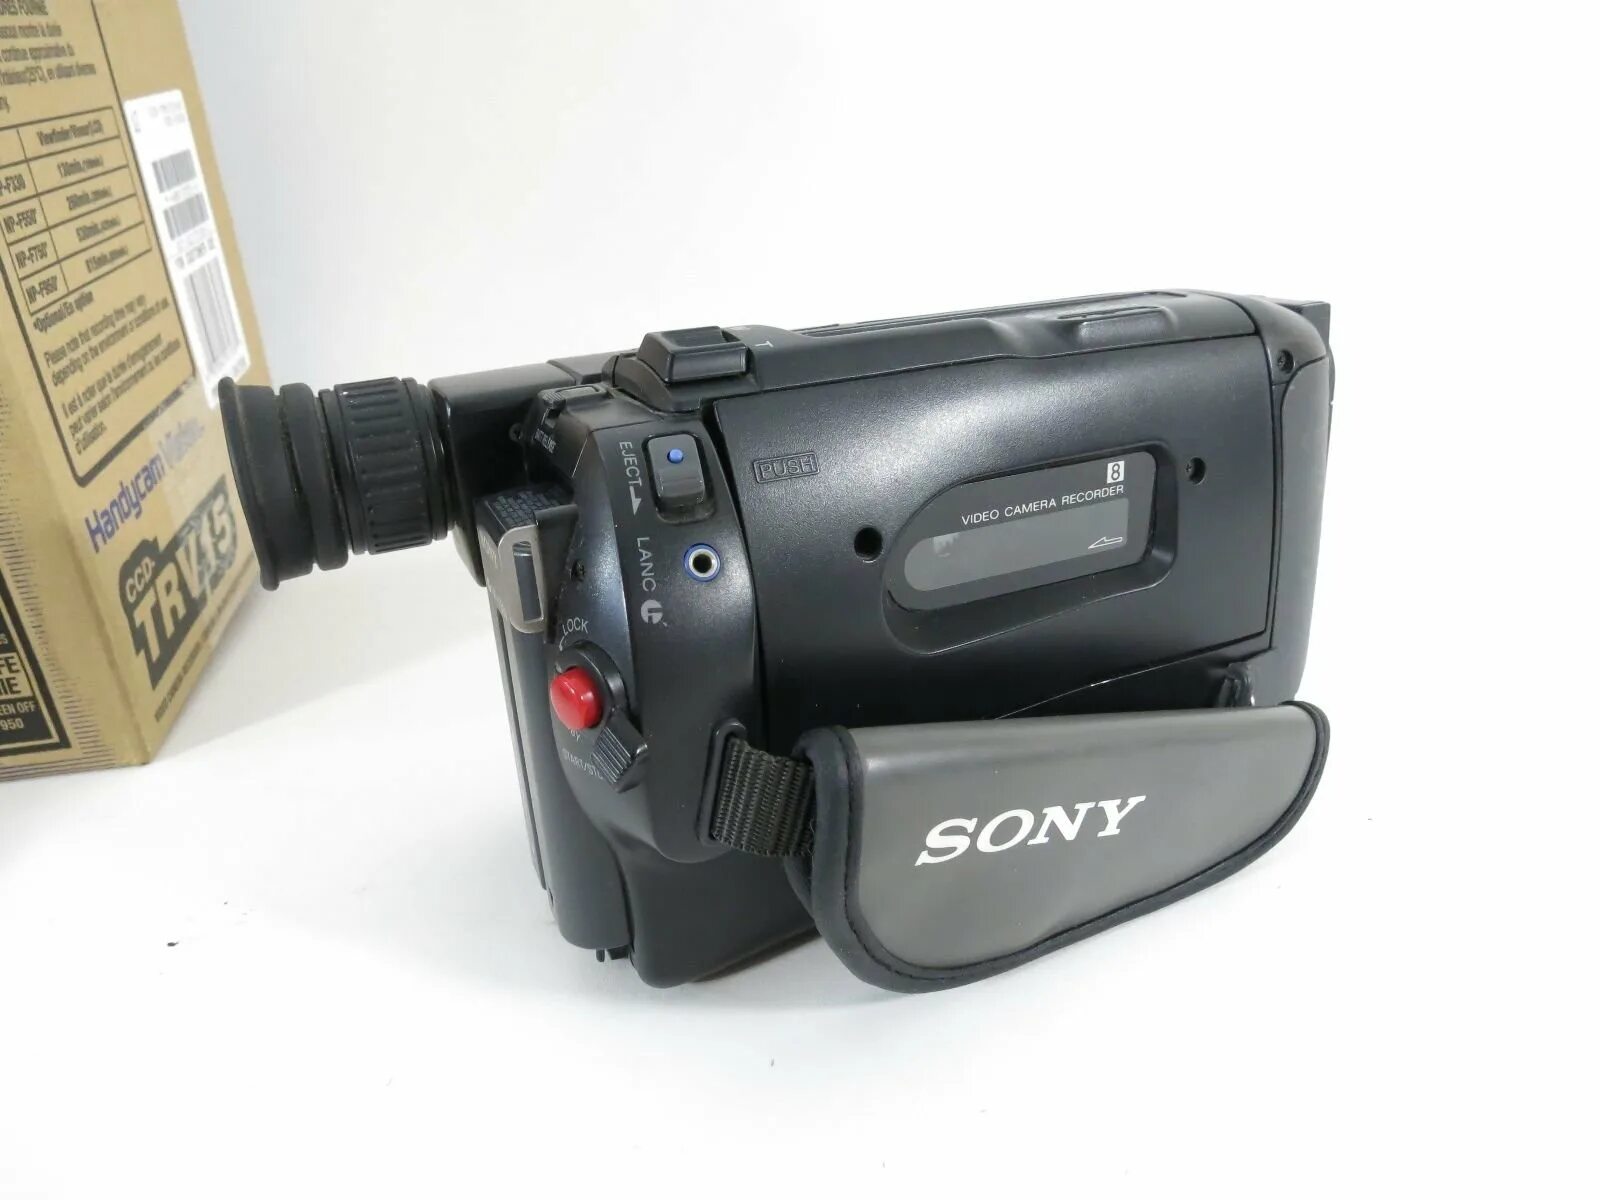 Sony Handycam 8. Видеокамера Sony Handycam 640x. Sony Handycam 8mm. Видеокамера сони CCD tr503e. 9.8 видео